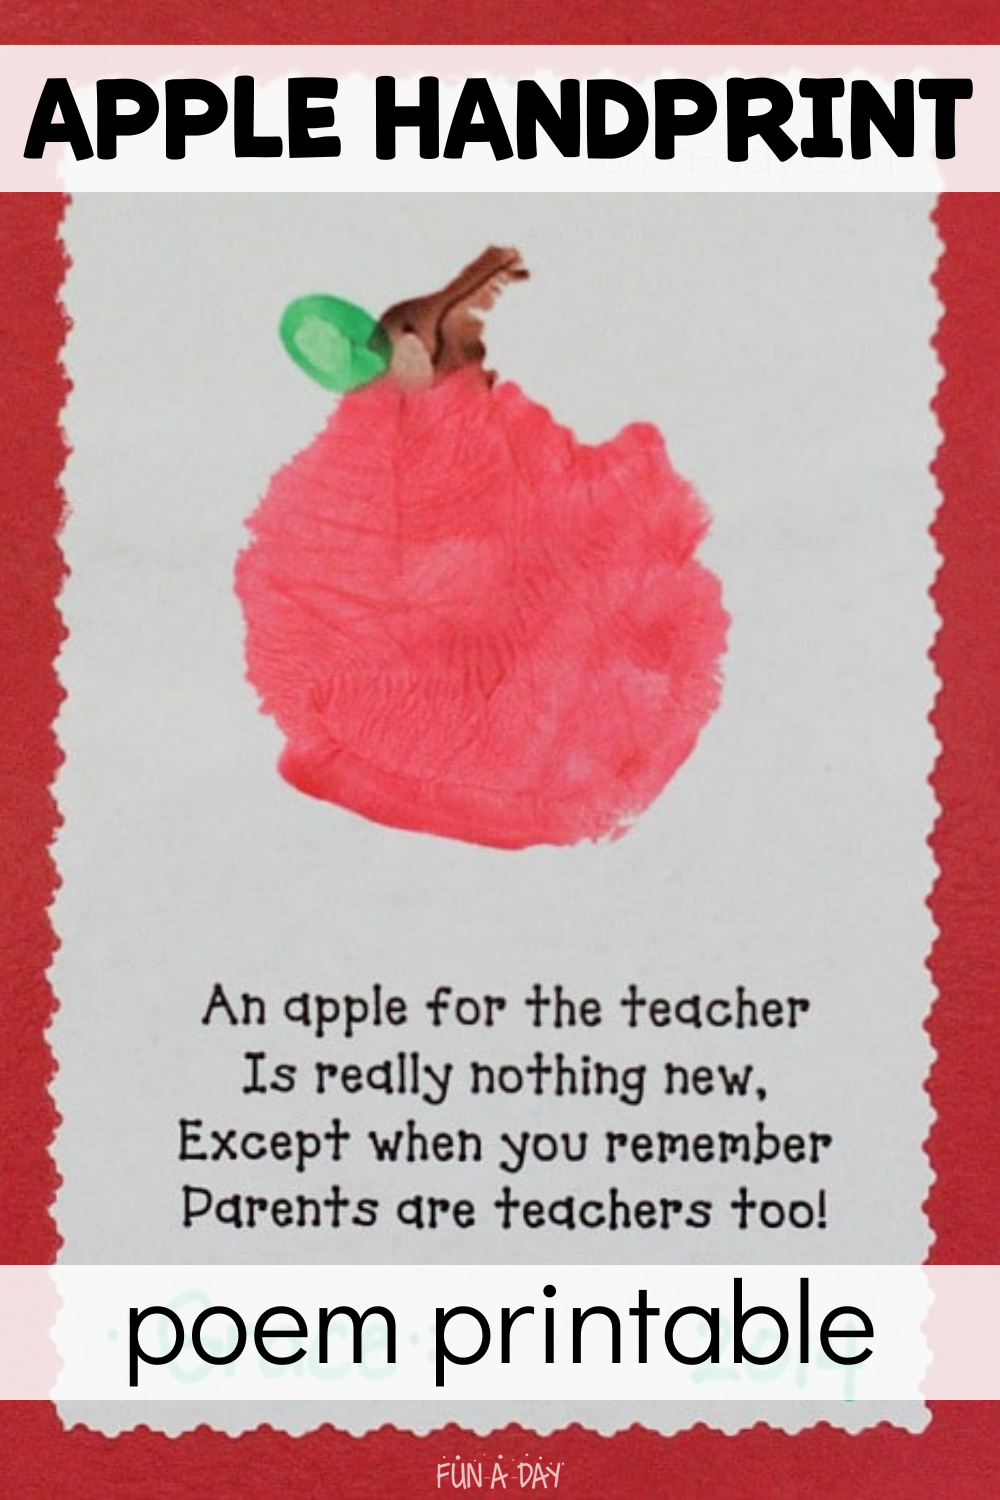 preschool handprint apple with text that reads apple handprint poem printable